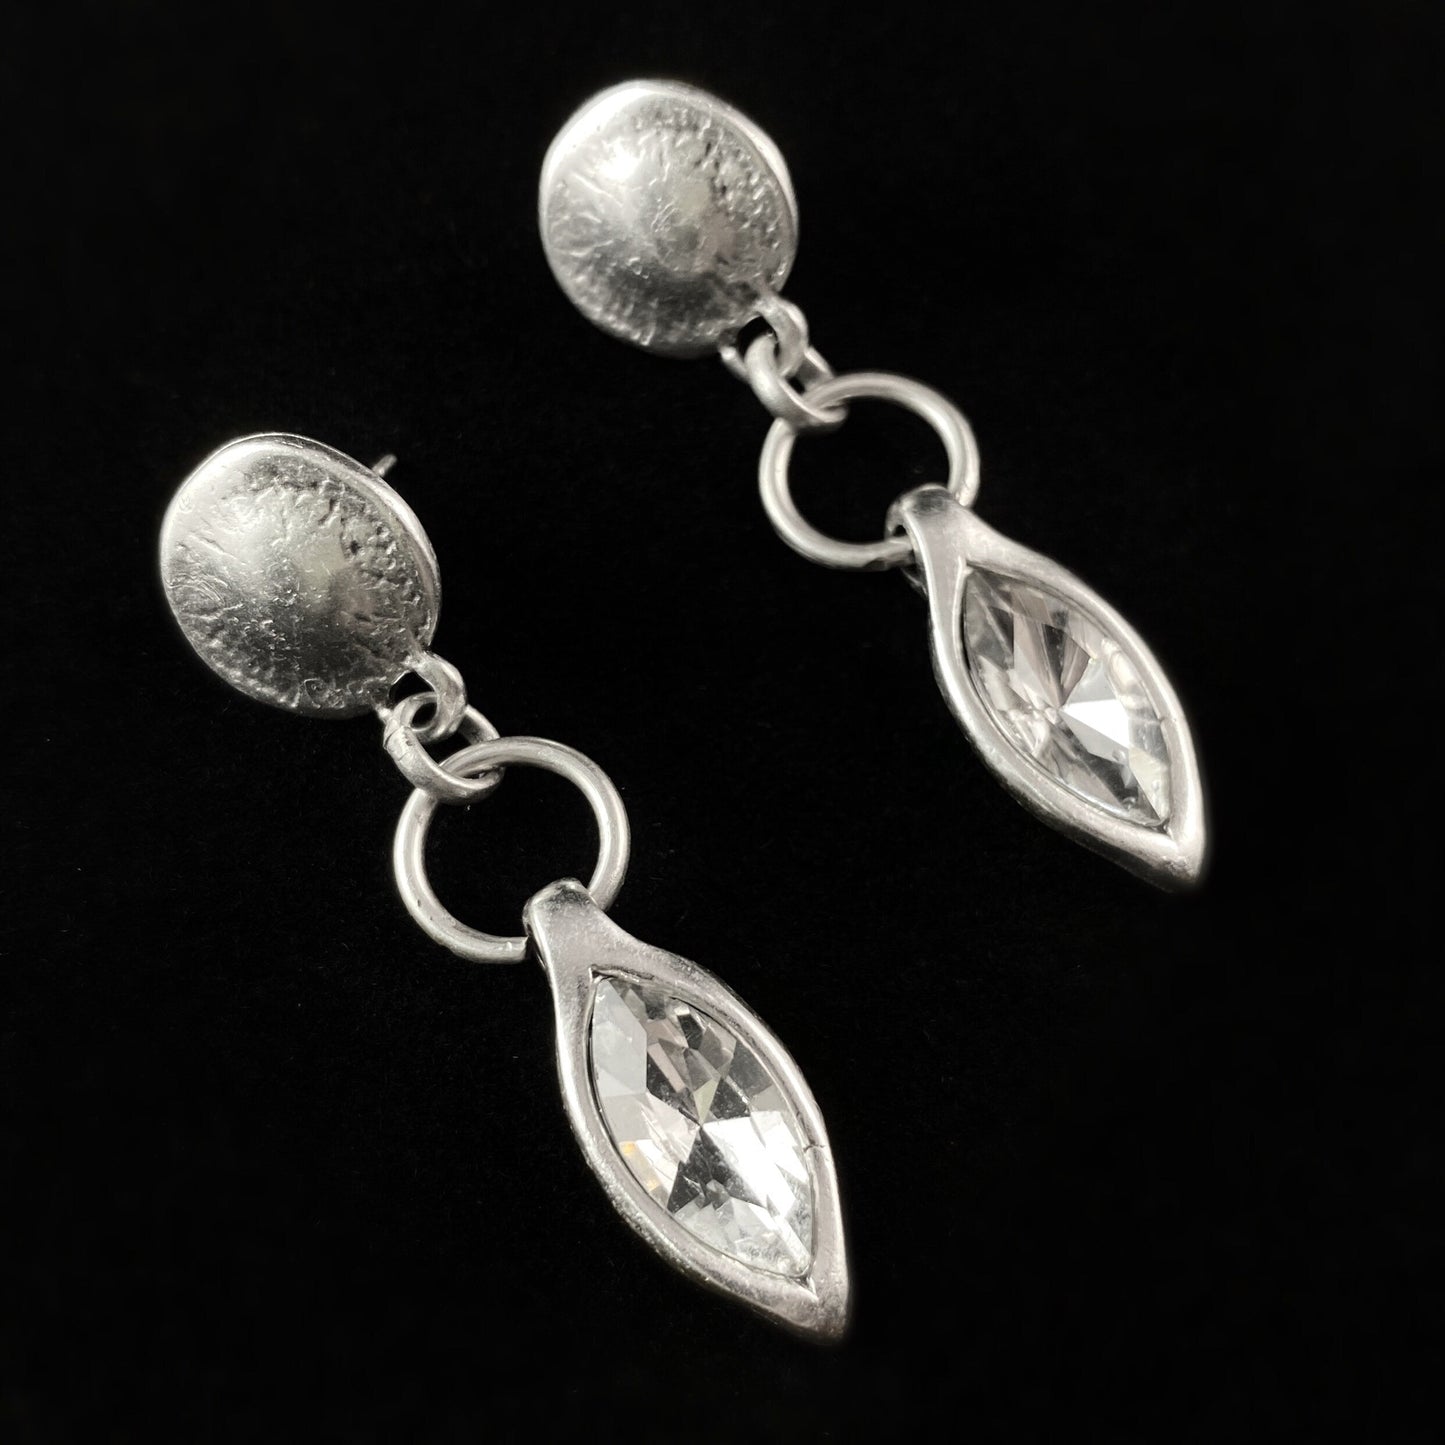 Silver Leaf Crystal Drop Earrings -  Handmade, Nickel Free - Elegant Minimalist Jewelry for Women